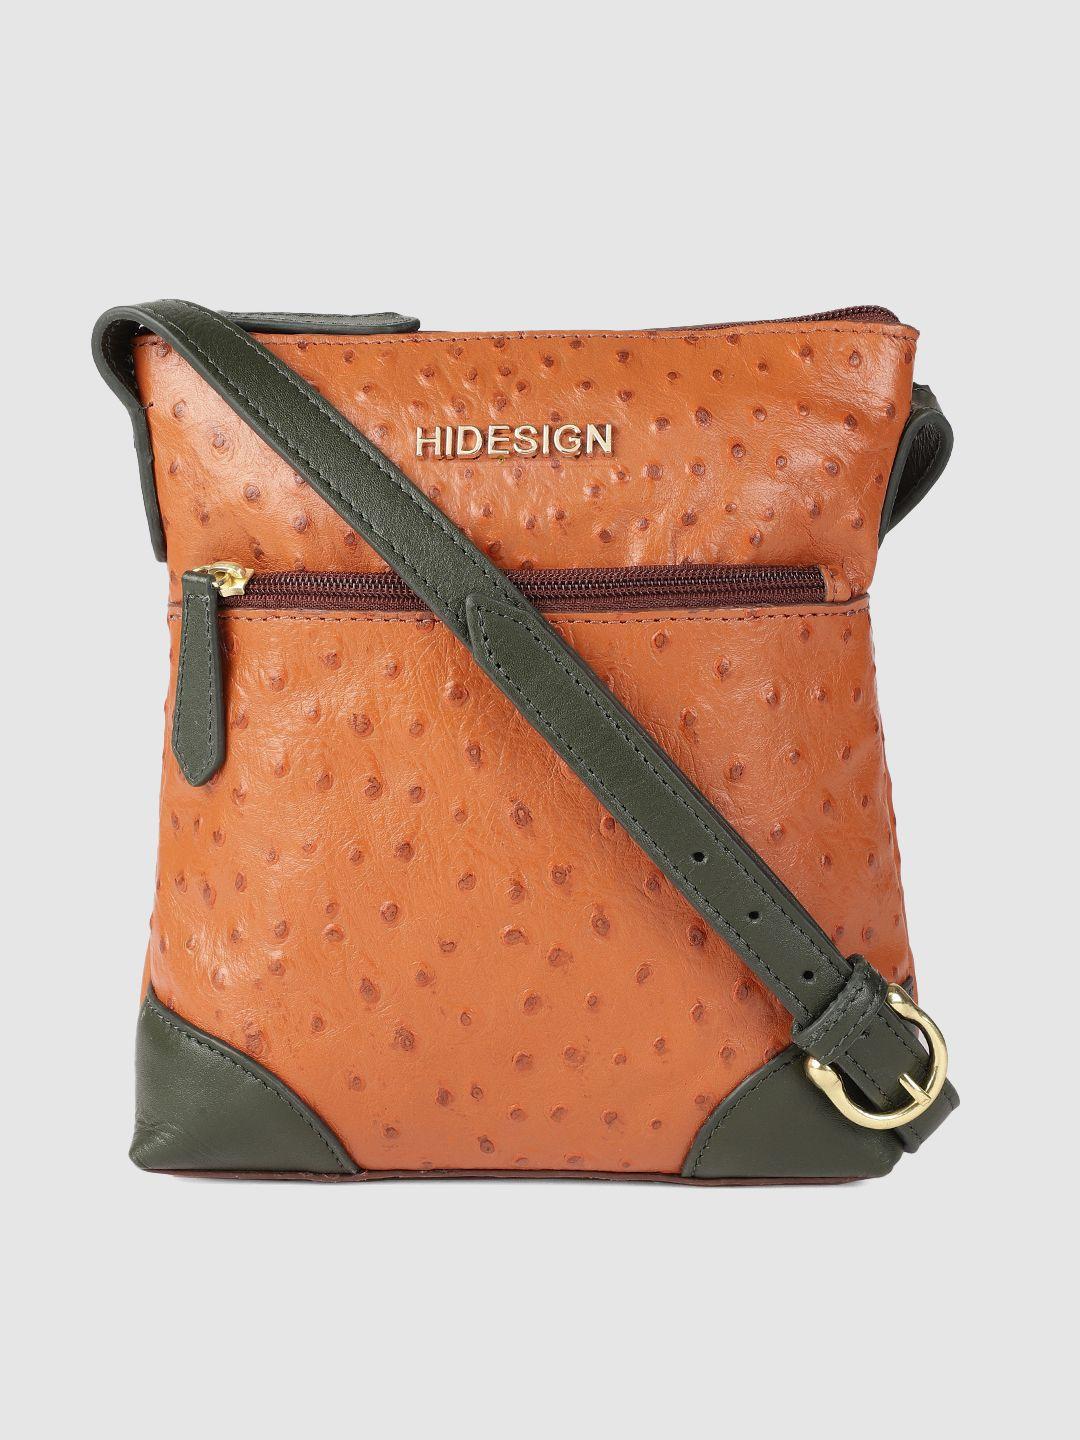 hidesign women tan brown textured leather sling bag